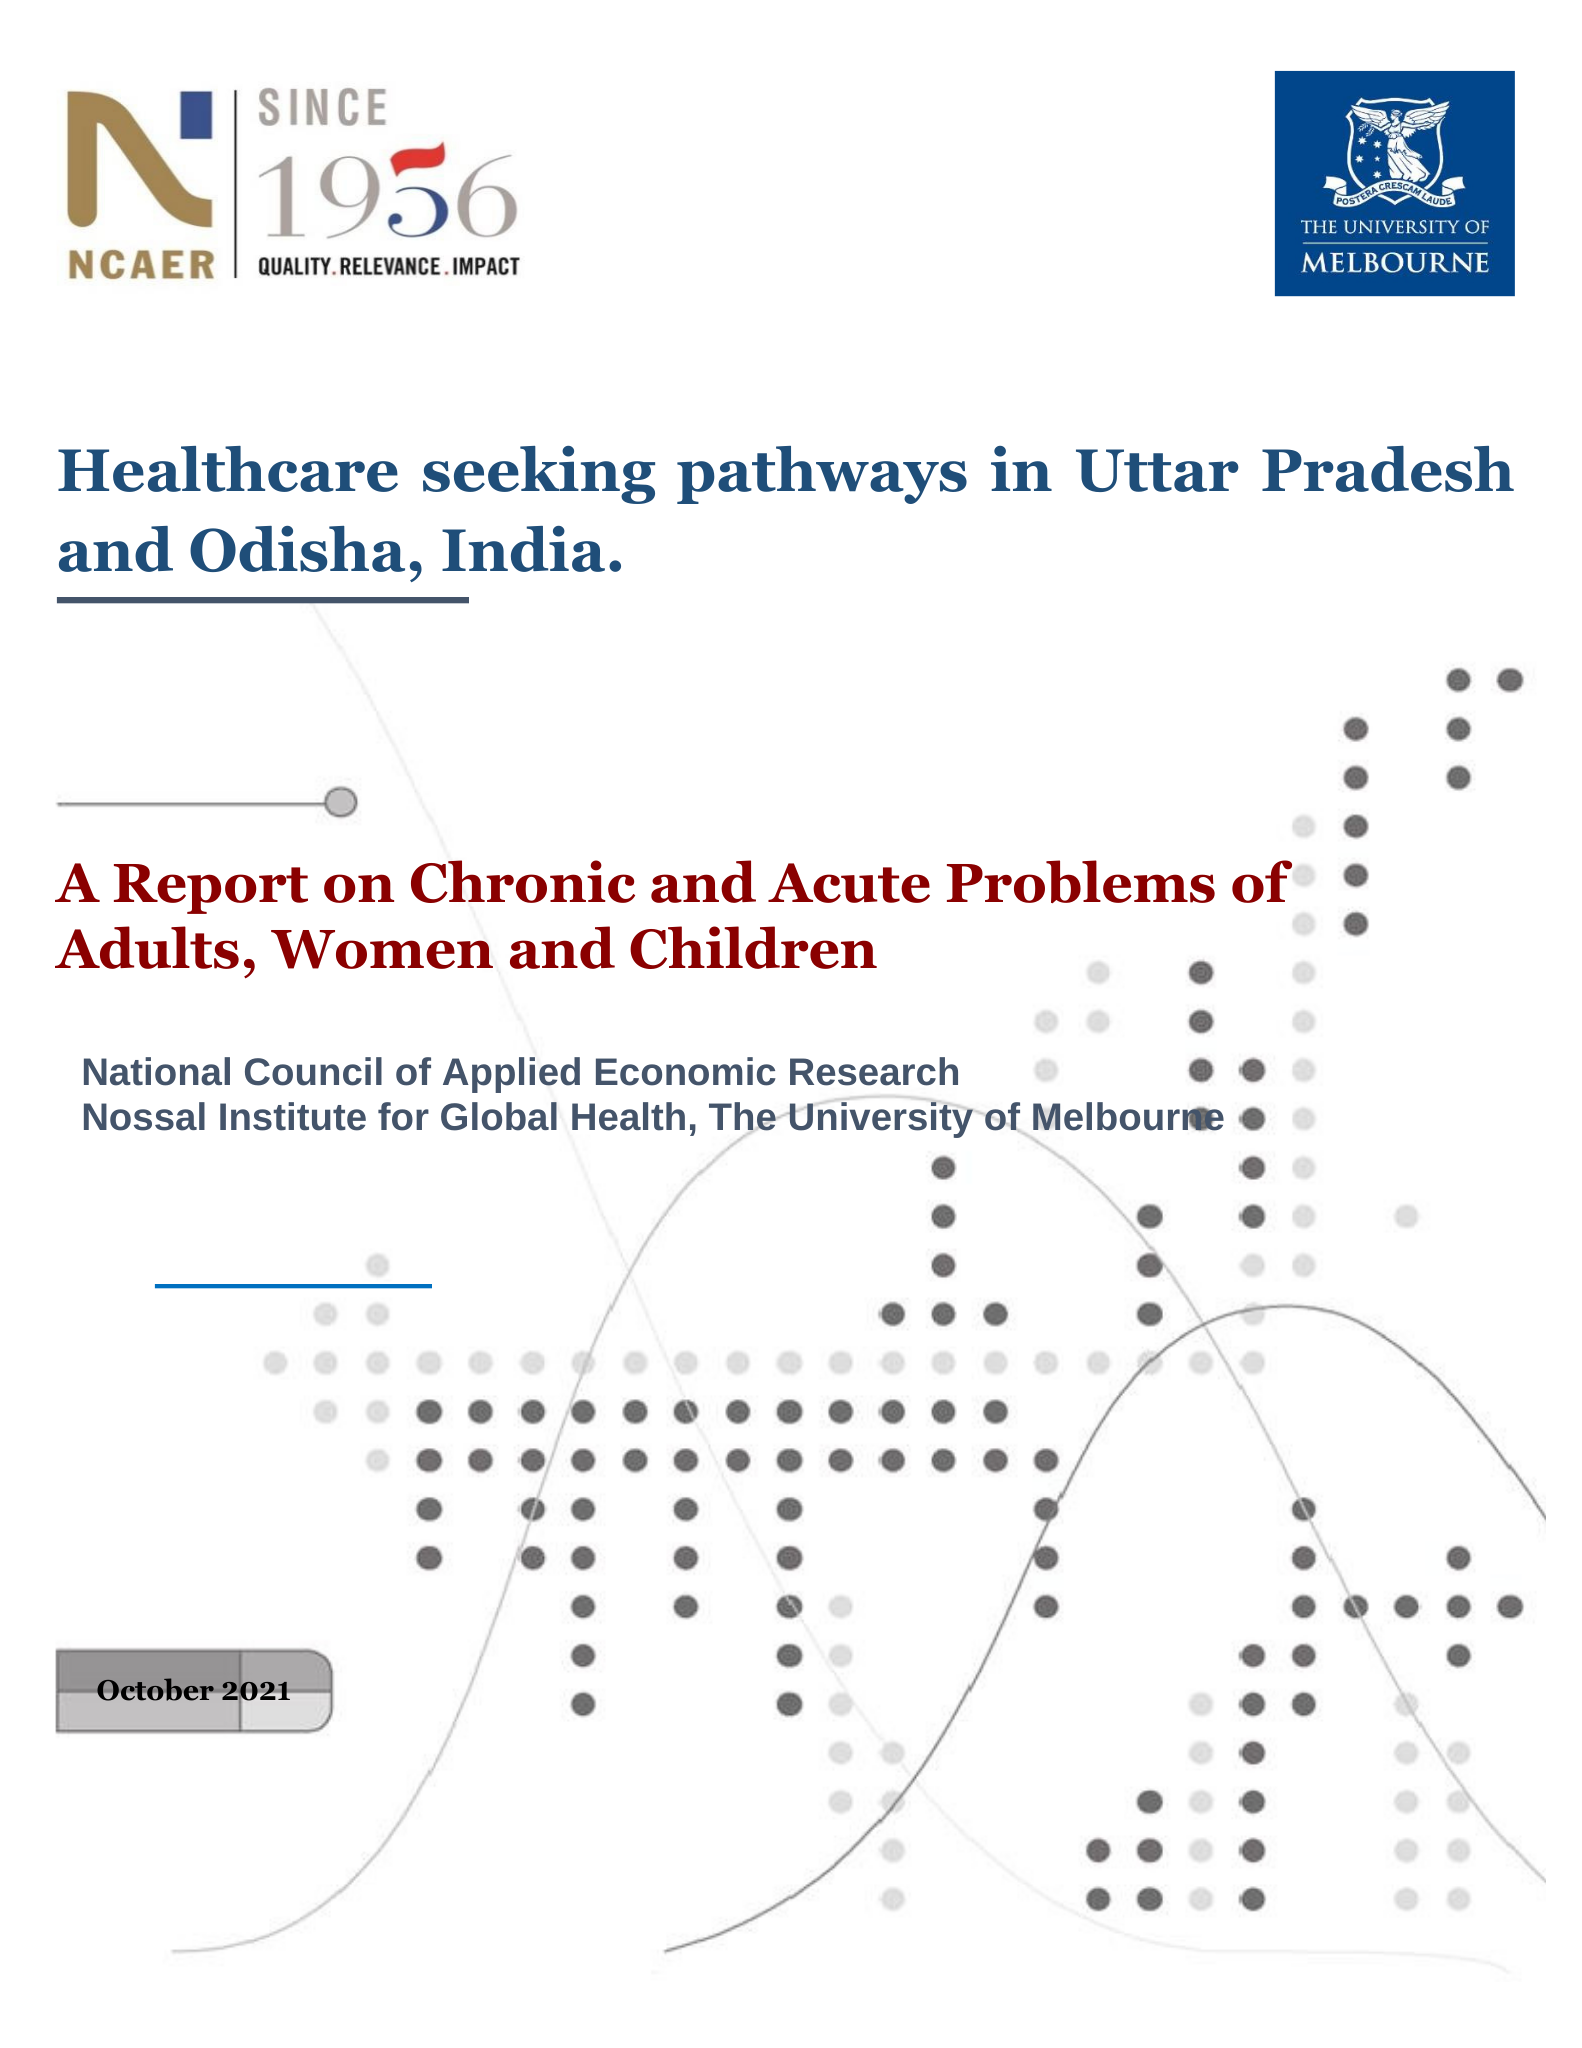 Healthcare seeking pathways in Uttar Pradesh and Odisha, India